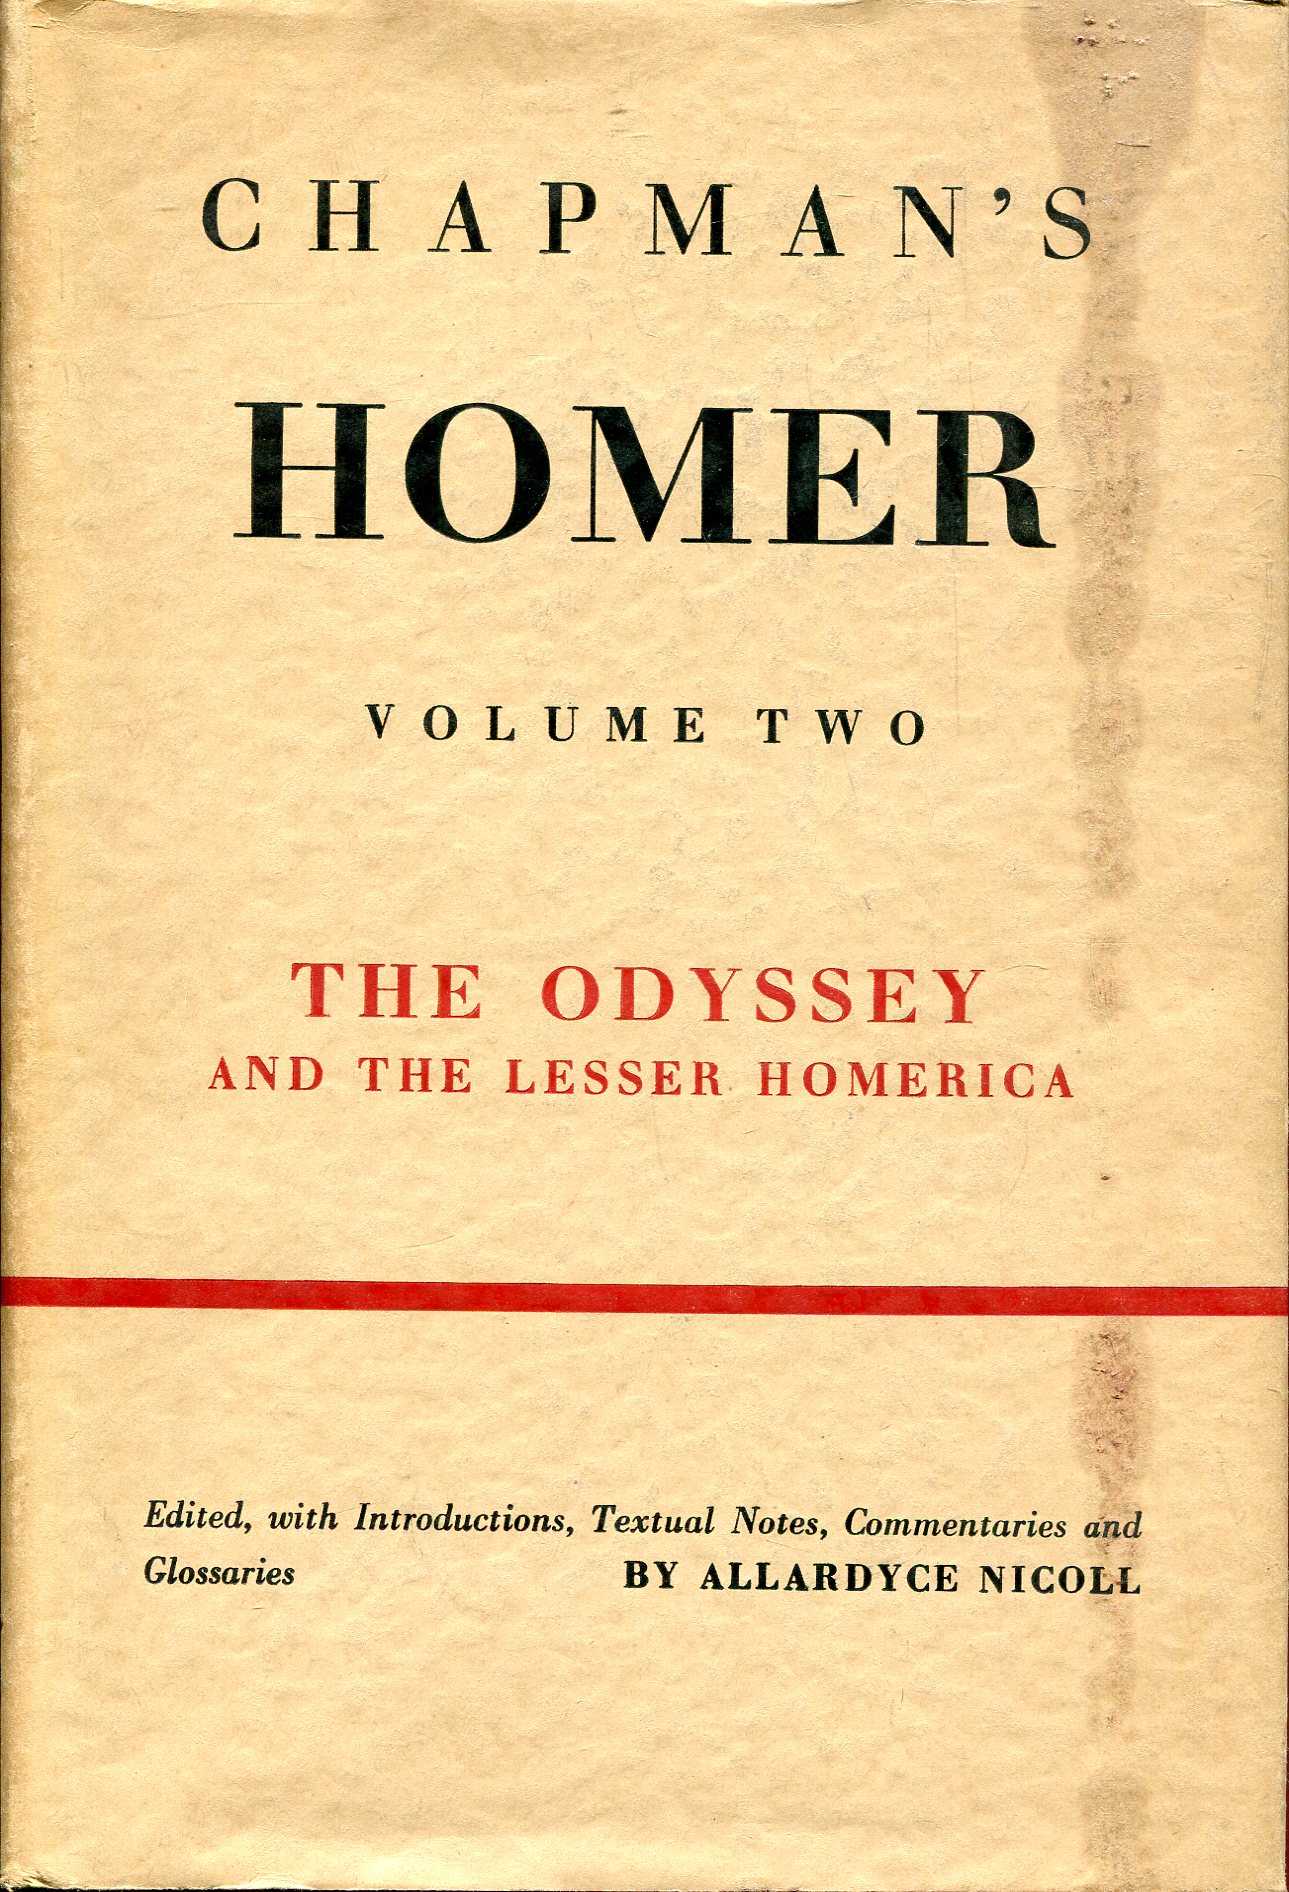 homer and the iliad